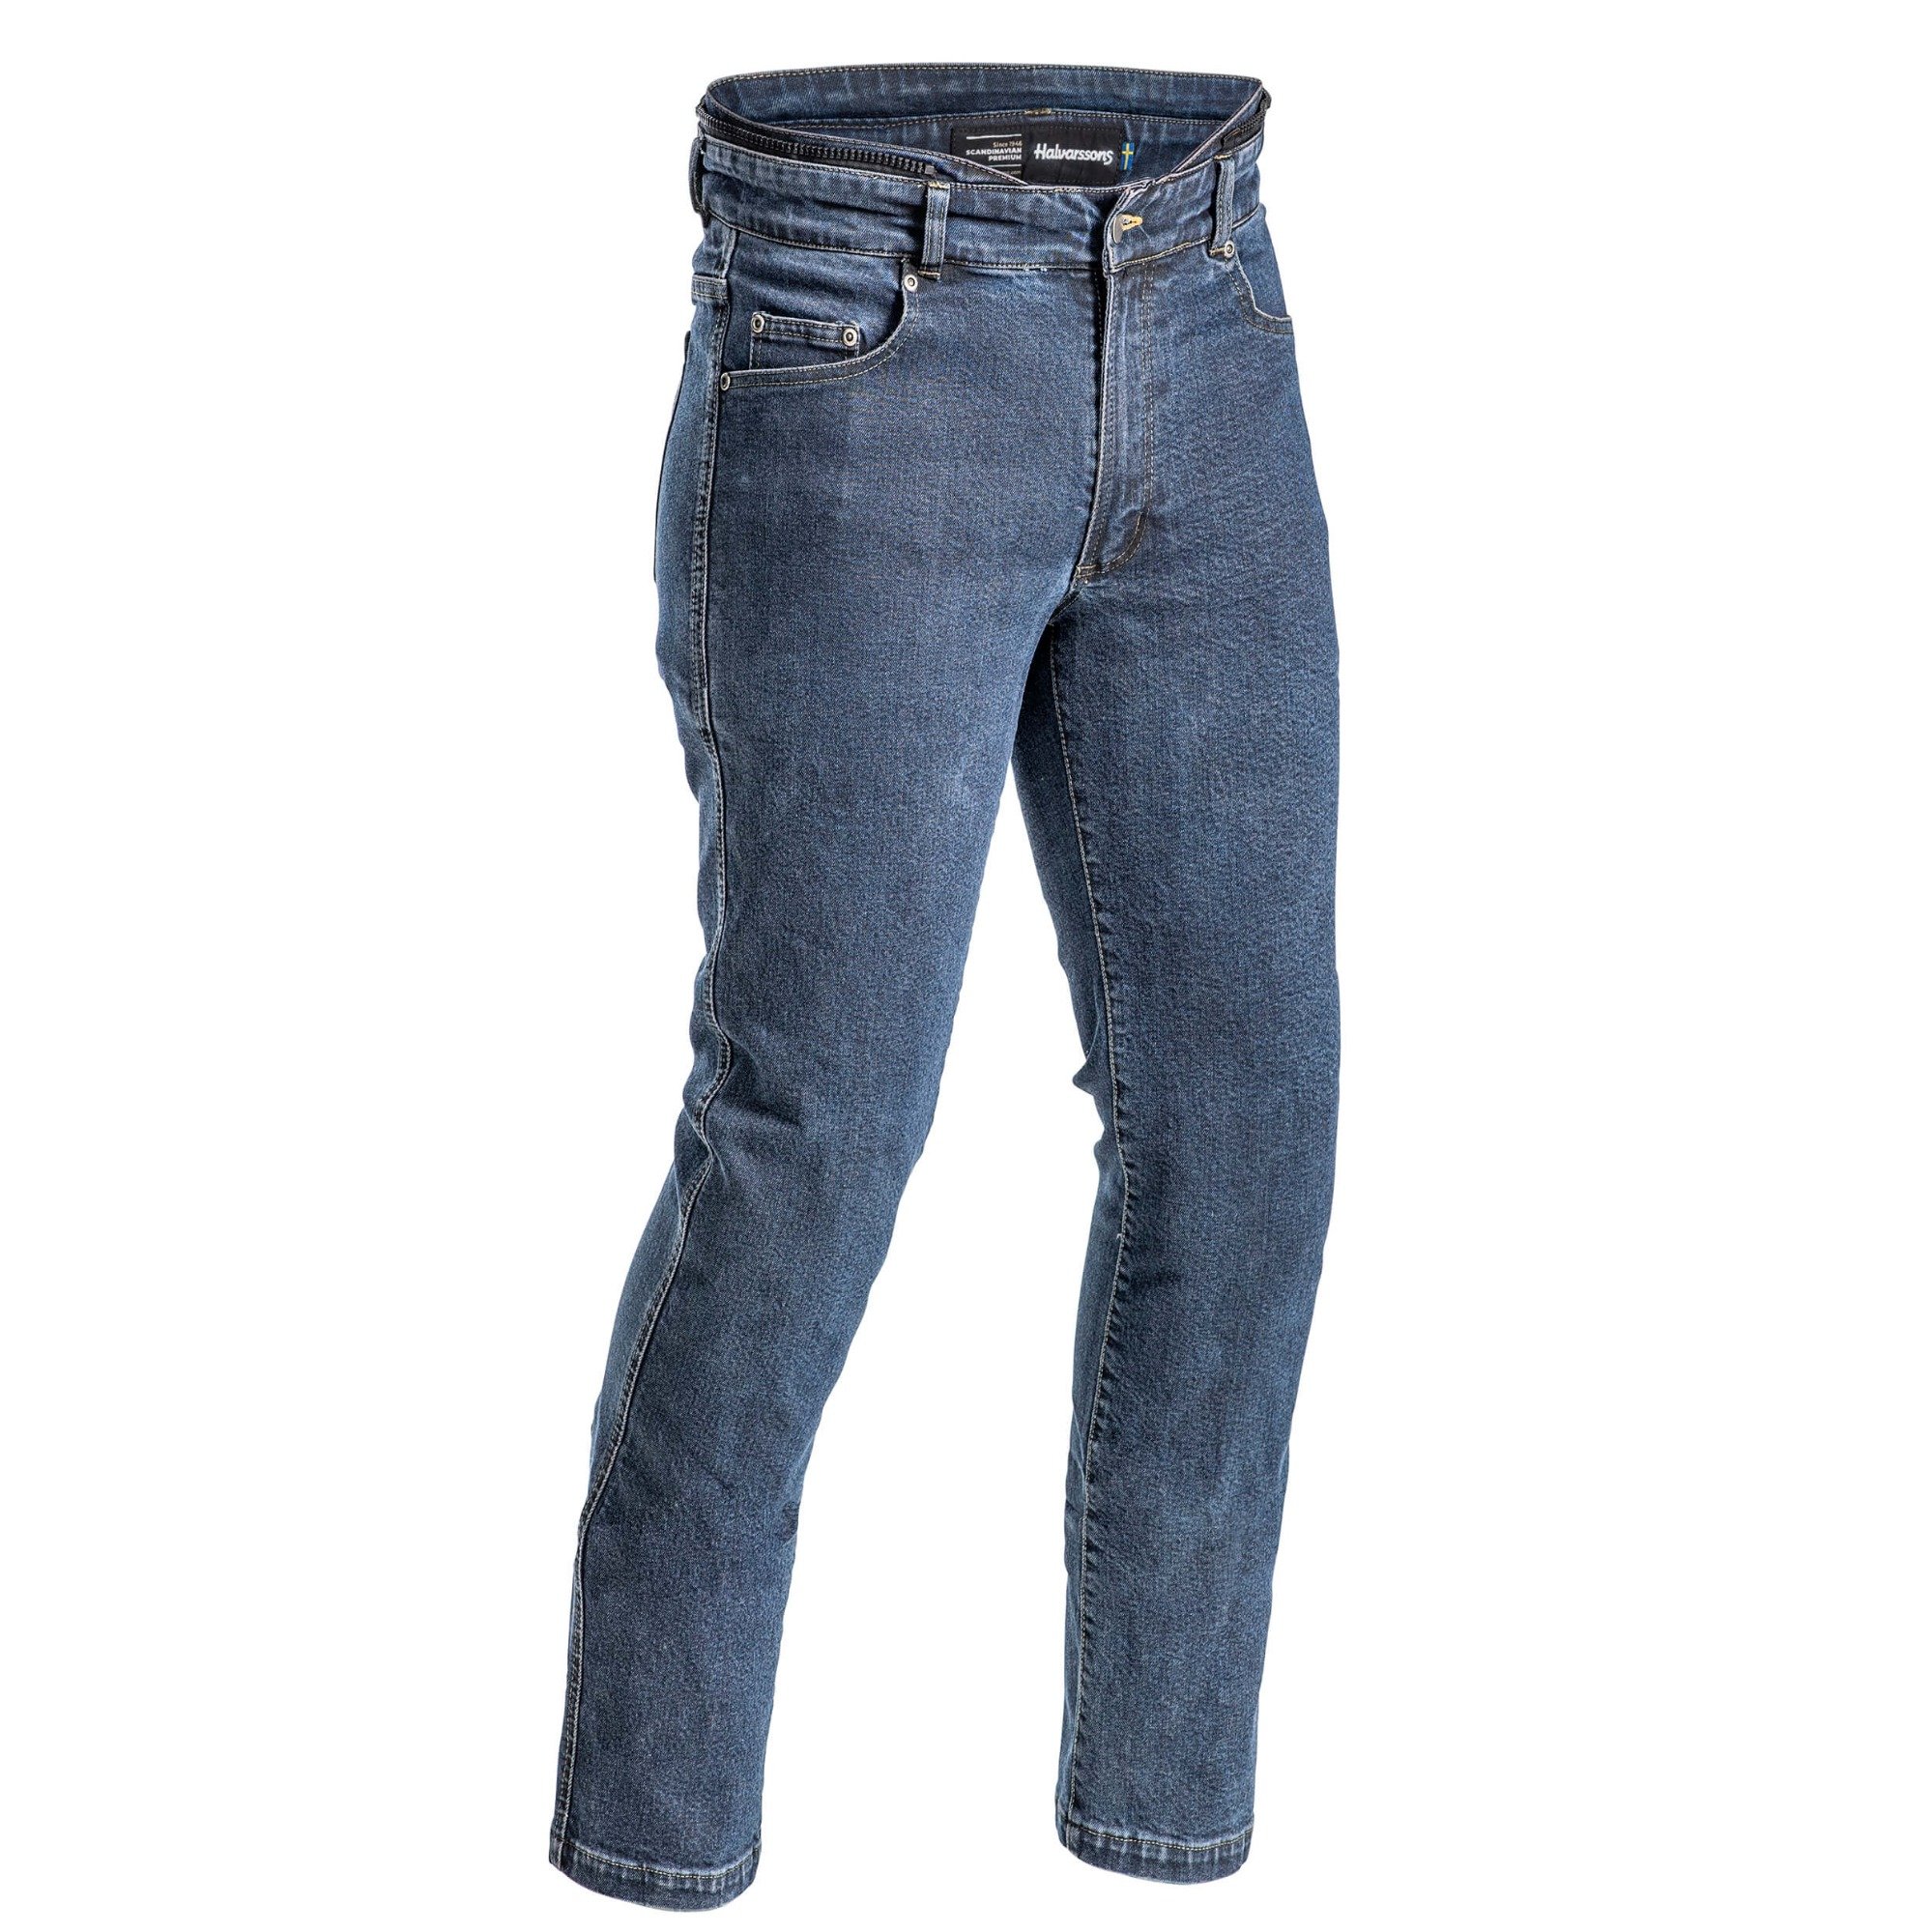 Image of Halvarssons Jeans Rogen Blue Short Size 54 ID 6438235239058